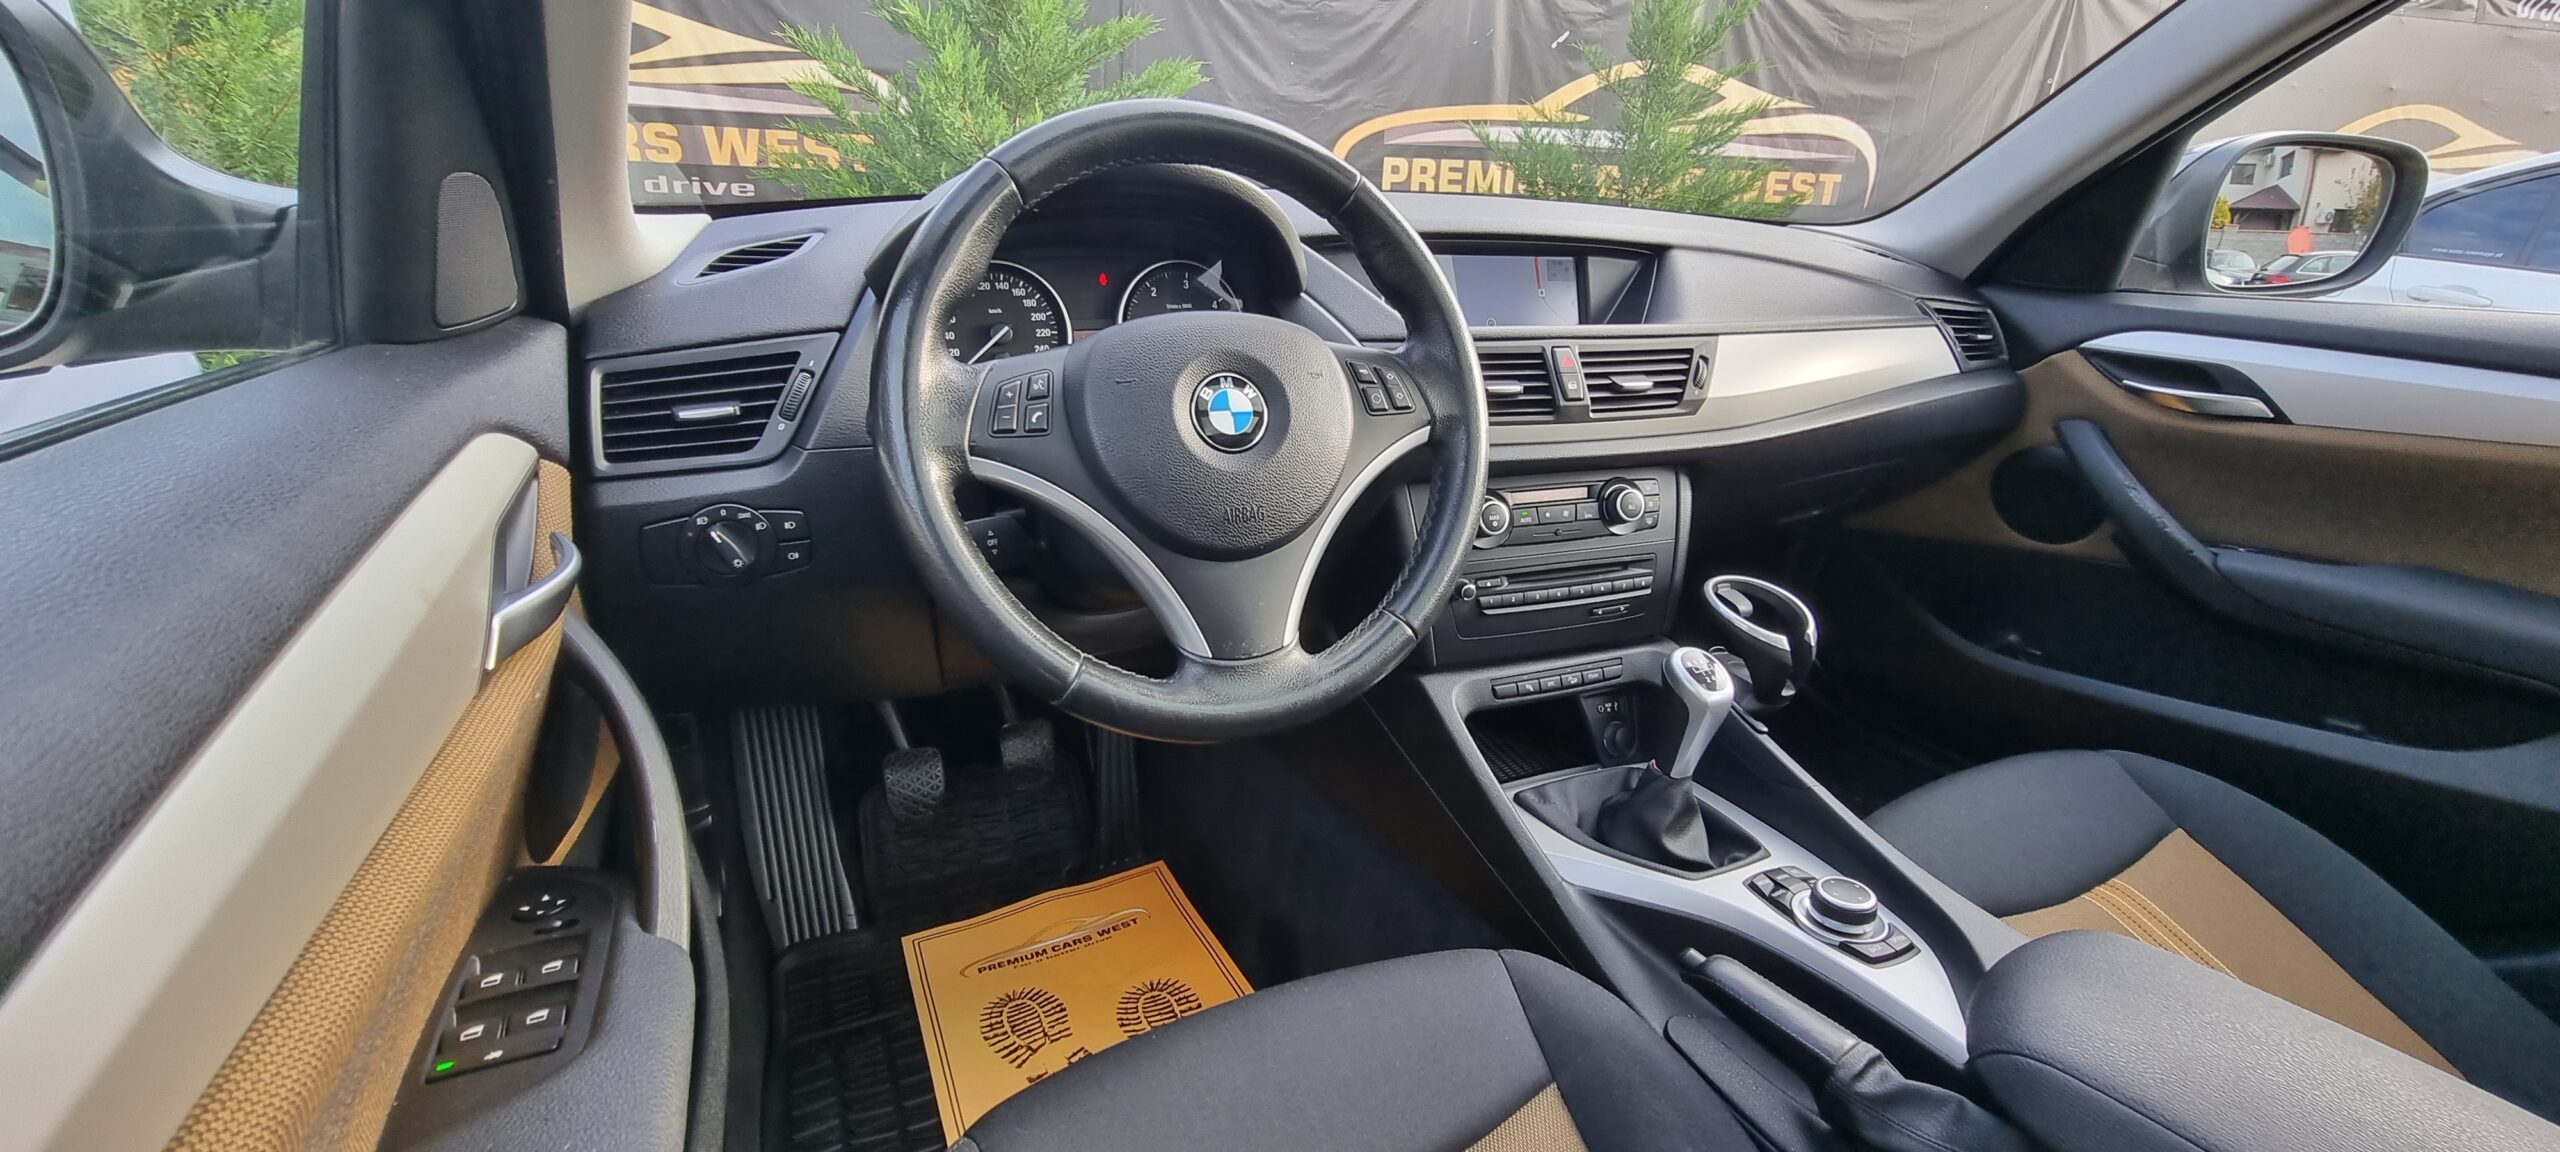 BMW X1 X-DRIVE, 2.0 DIESEL, EURO 5